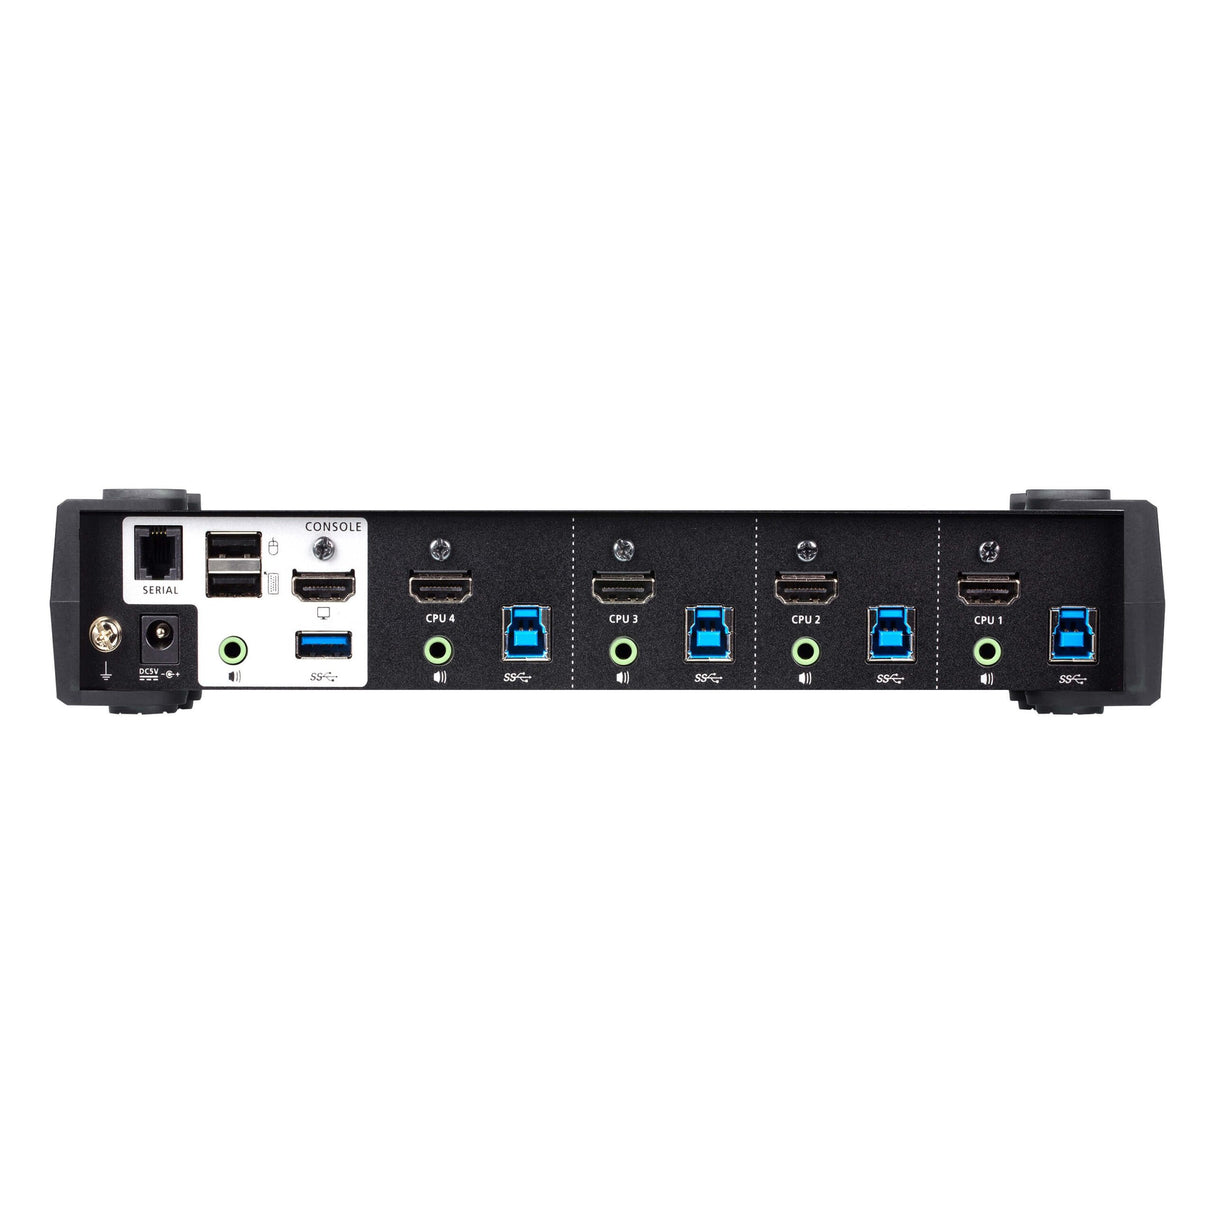 ATEN CS1824 4-Port USB 3.0 4K HDMI KVMP Switch with Audio Mixer Mode